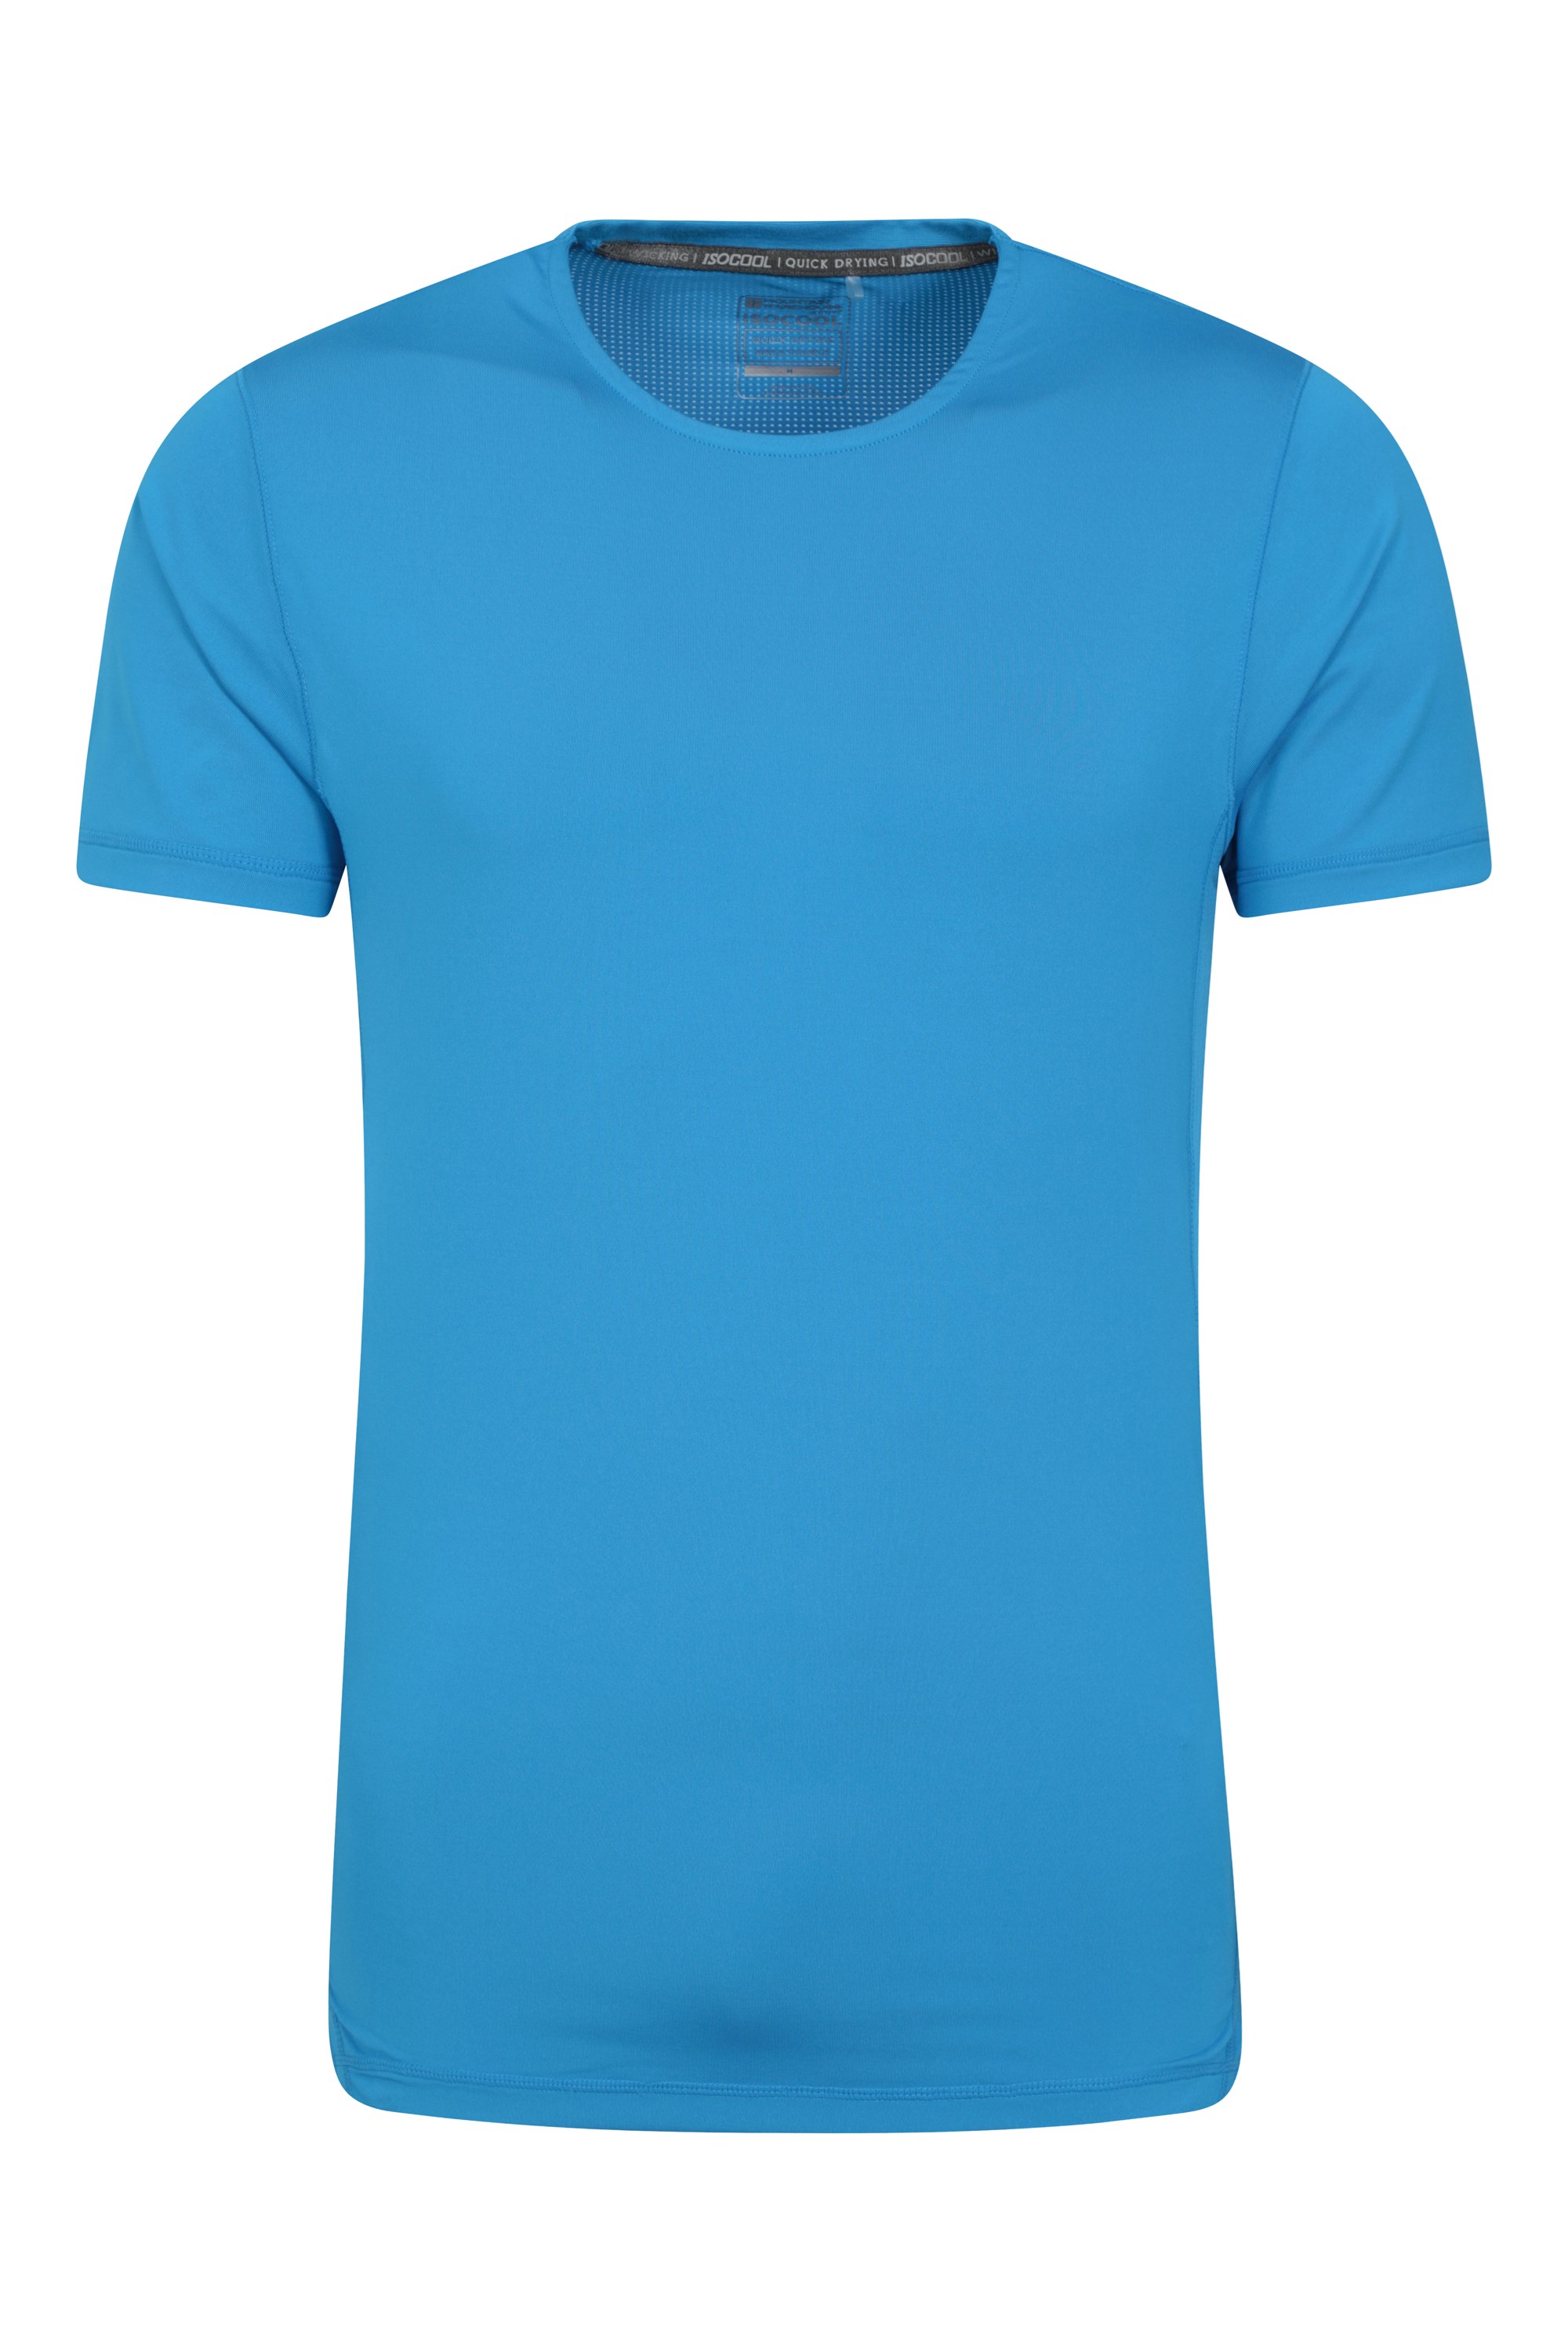 Mantra Isocool Mens T-shirt - Blue